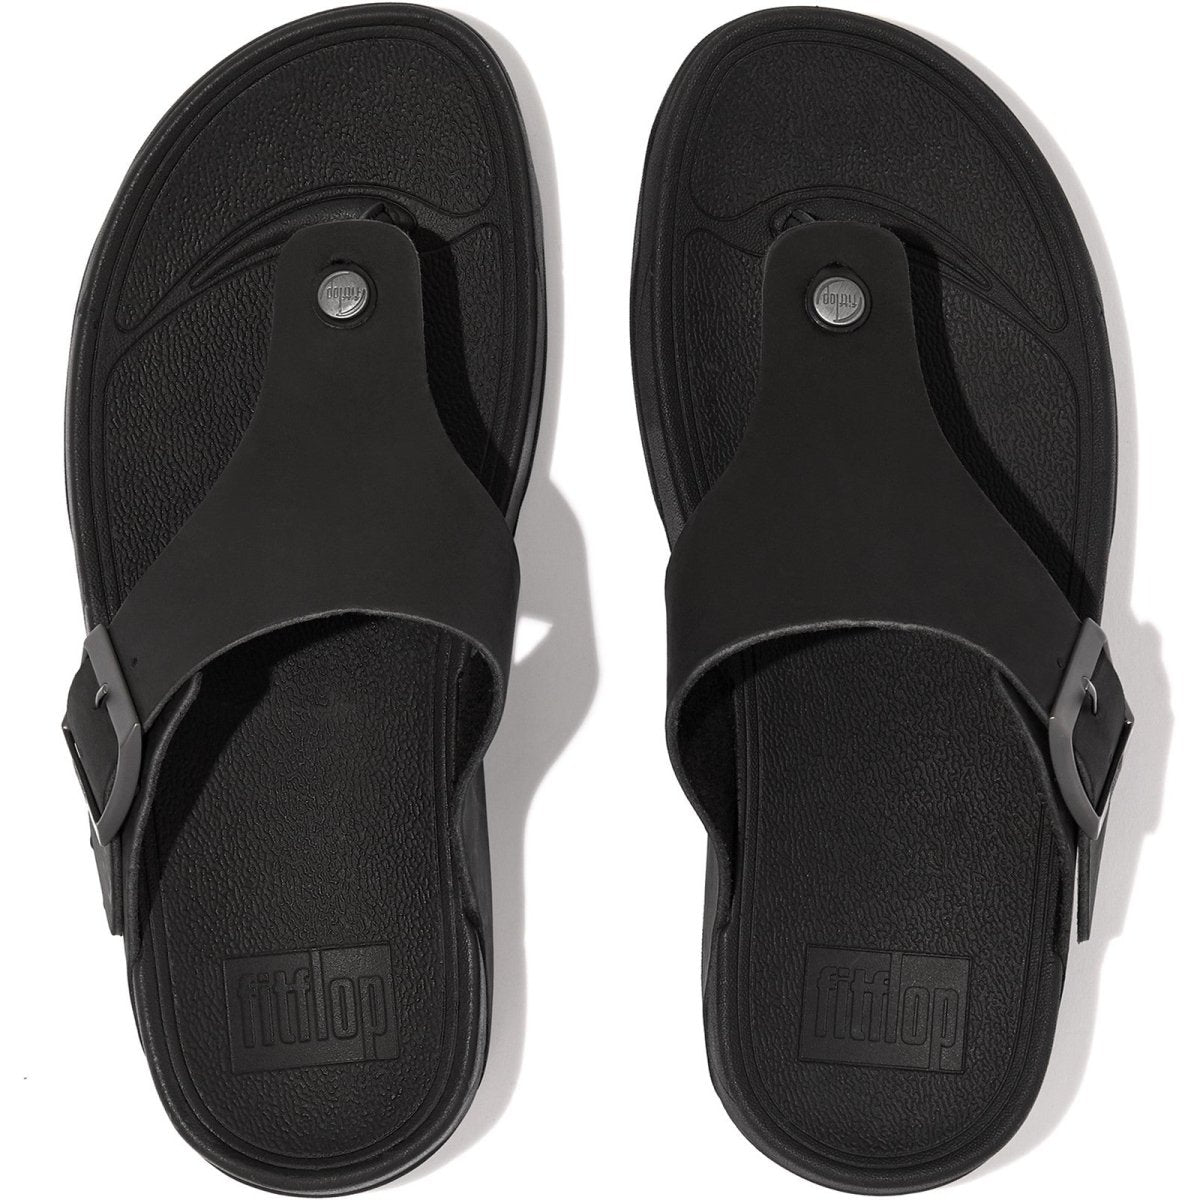 Fitflop Trakk II Mens Leather Toe-Post Flip-Flop Summer Sandals - Shoe Store Direct